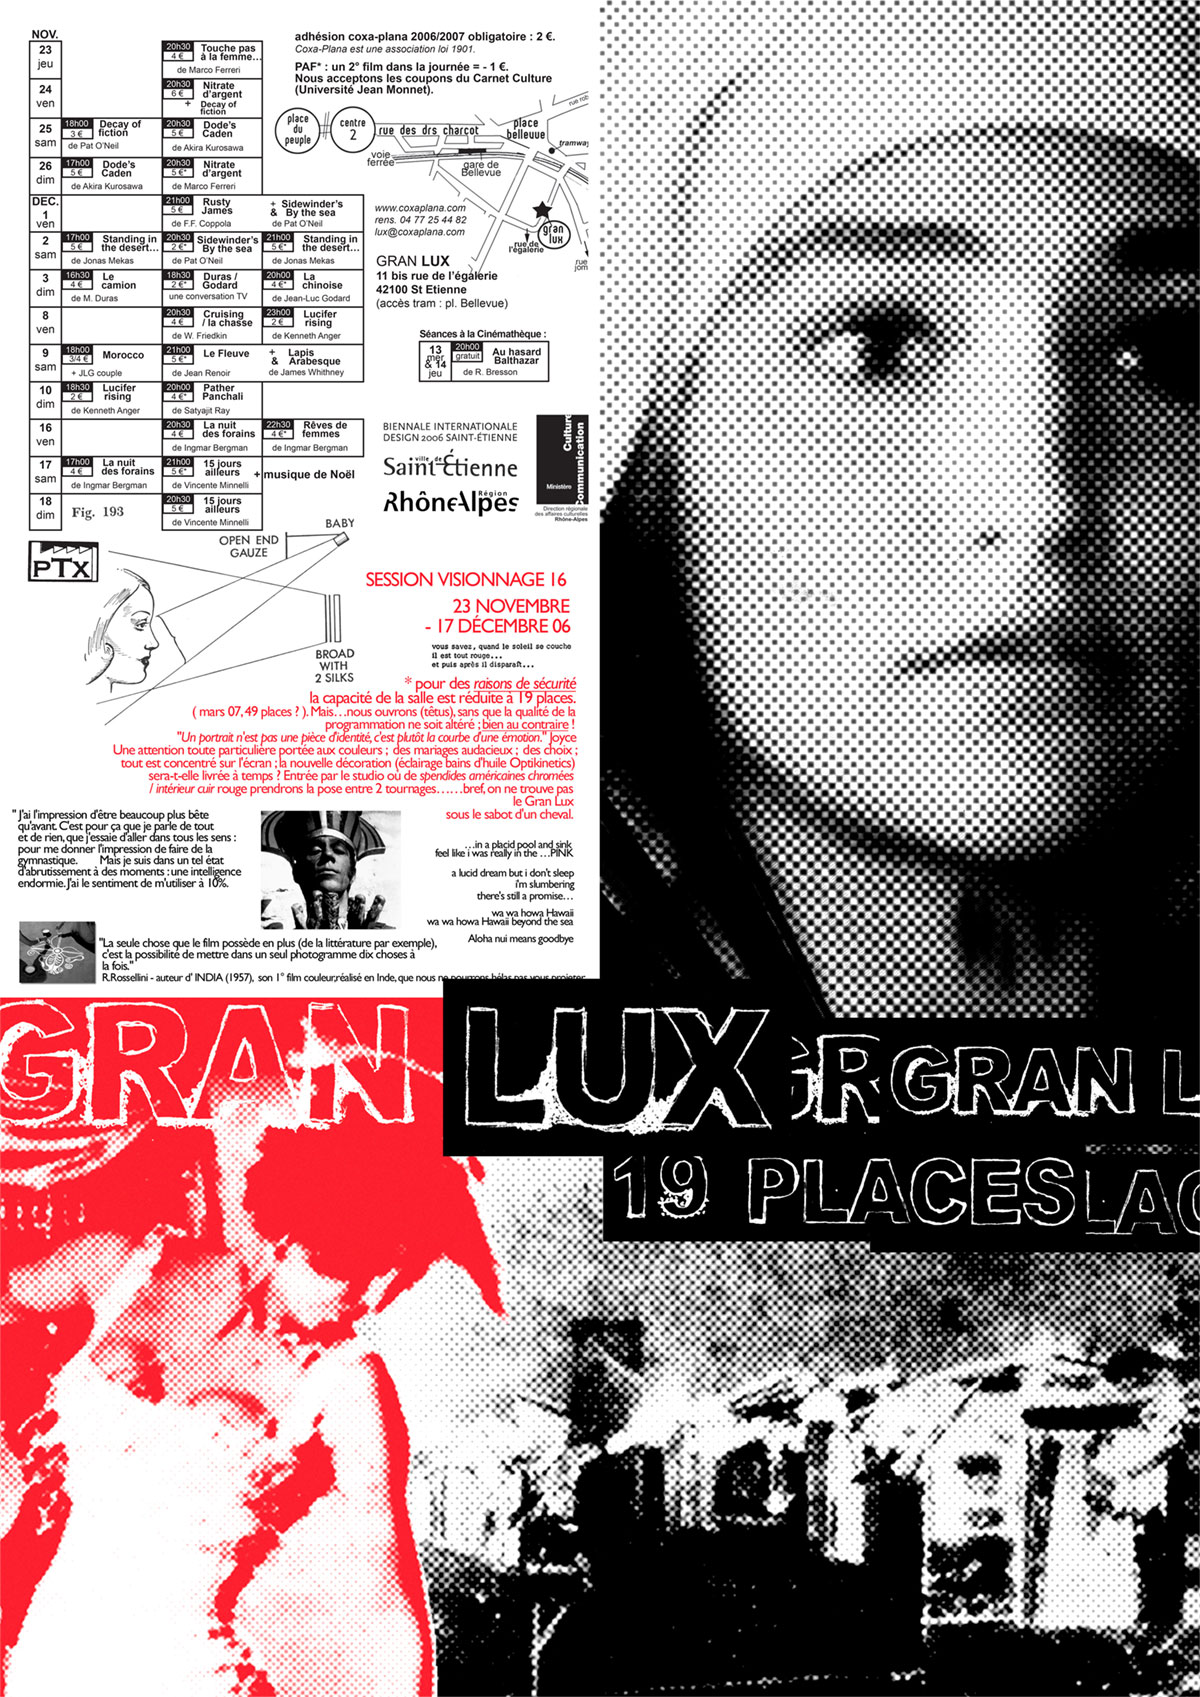 Gran Lux • session de visionnage 16 - recto